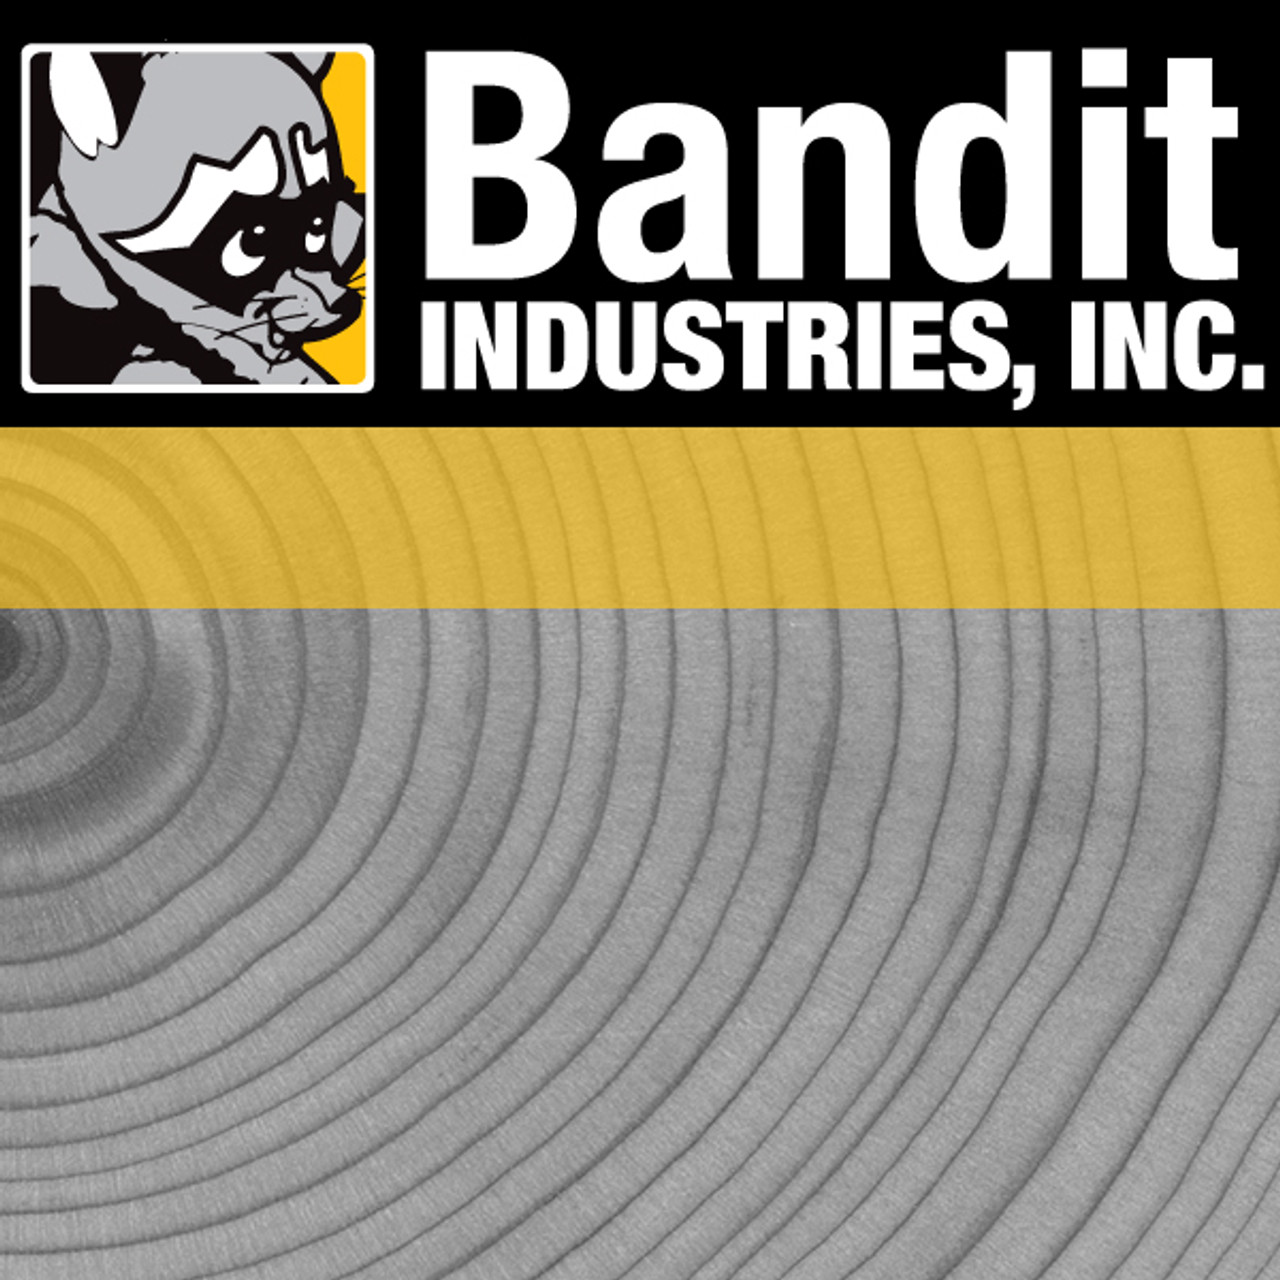 OPTION-401-5000-05: BANDIT HYD. GATE OPTION W/ HOSES AND CYLINDER